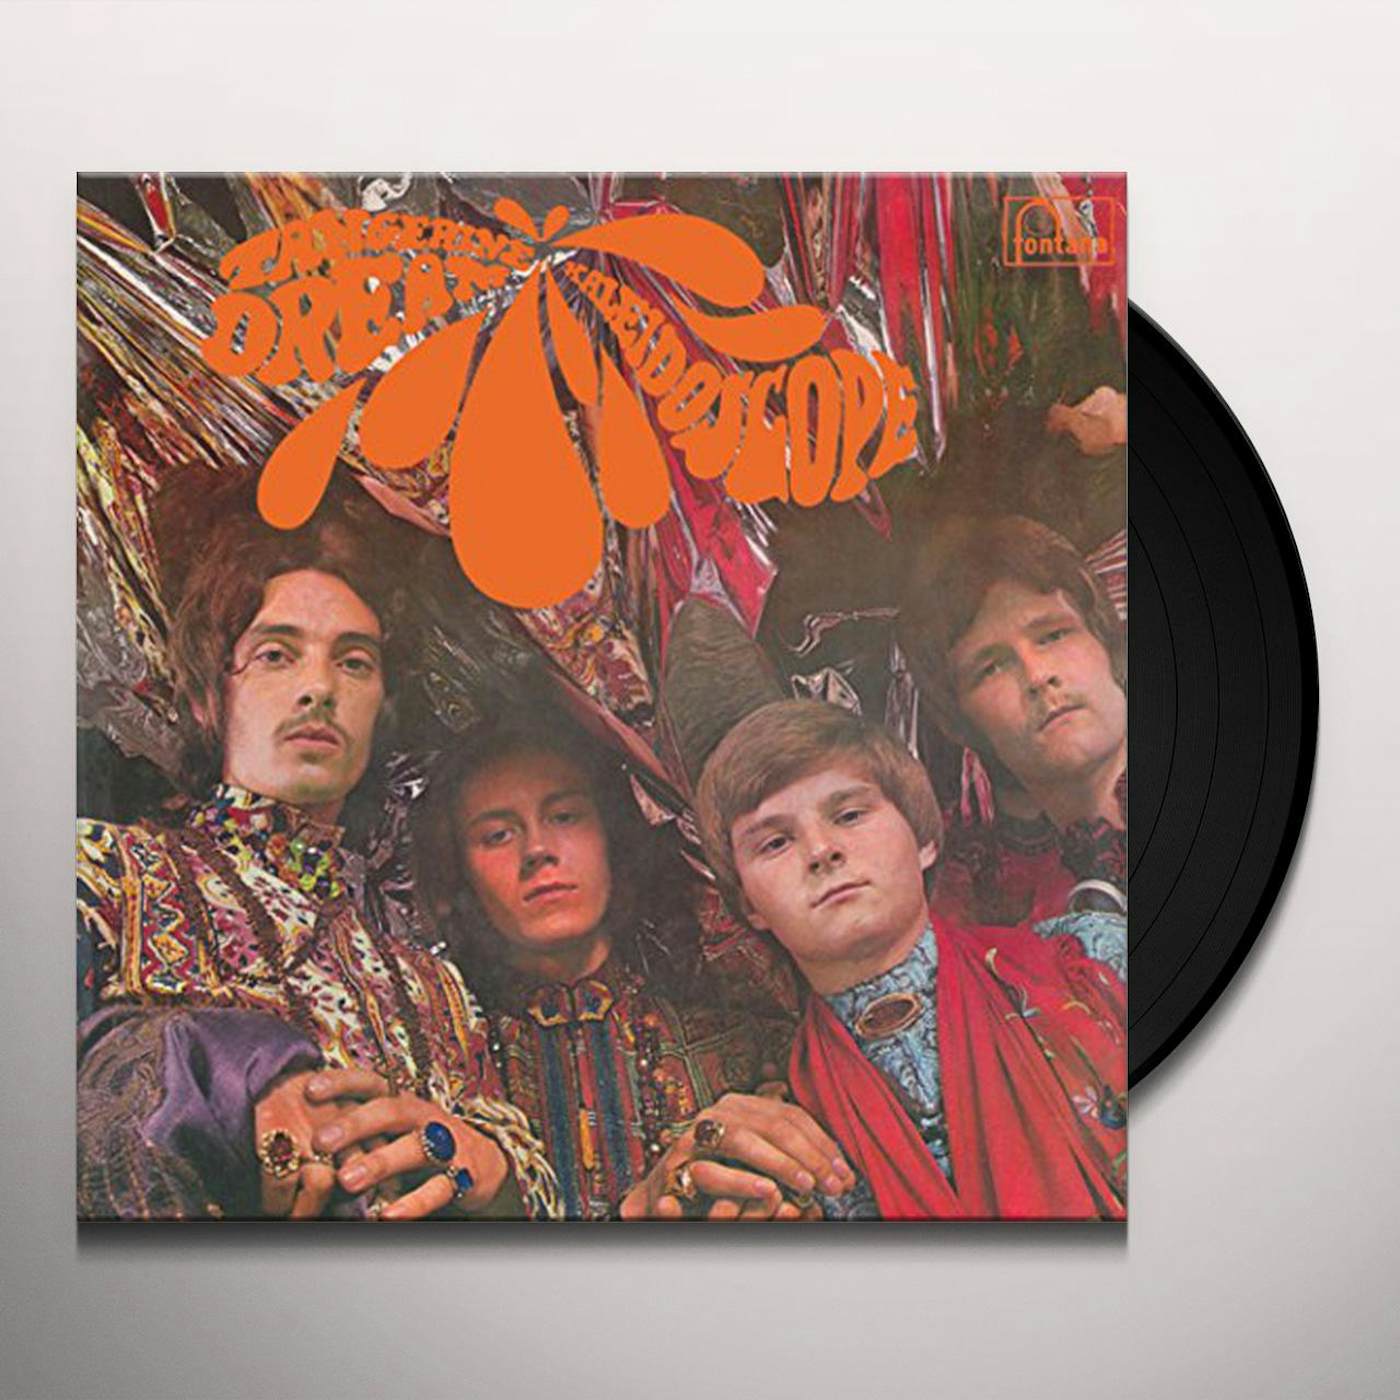 Kaleidoscope Tangerine Dream Vinyl Record